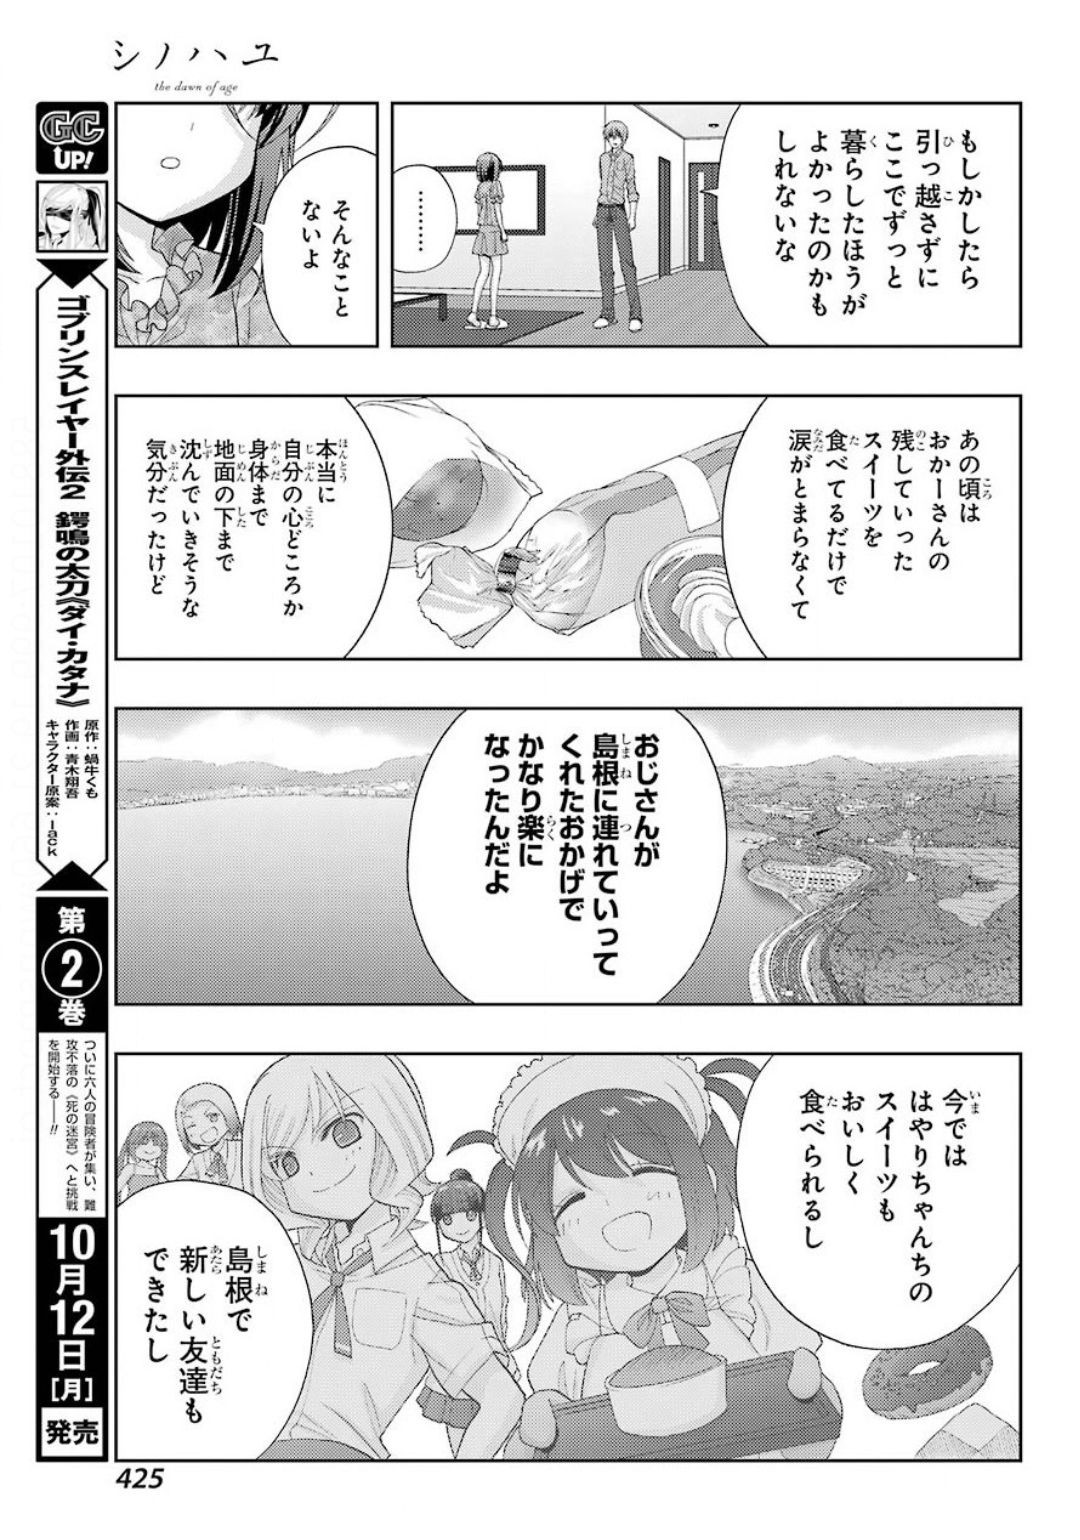 Shinohayu - The Dawn of Age Manga - Chapter 082 - Page 23